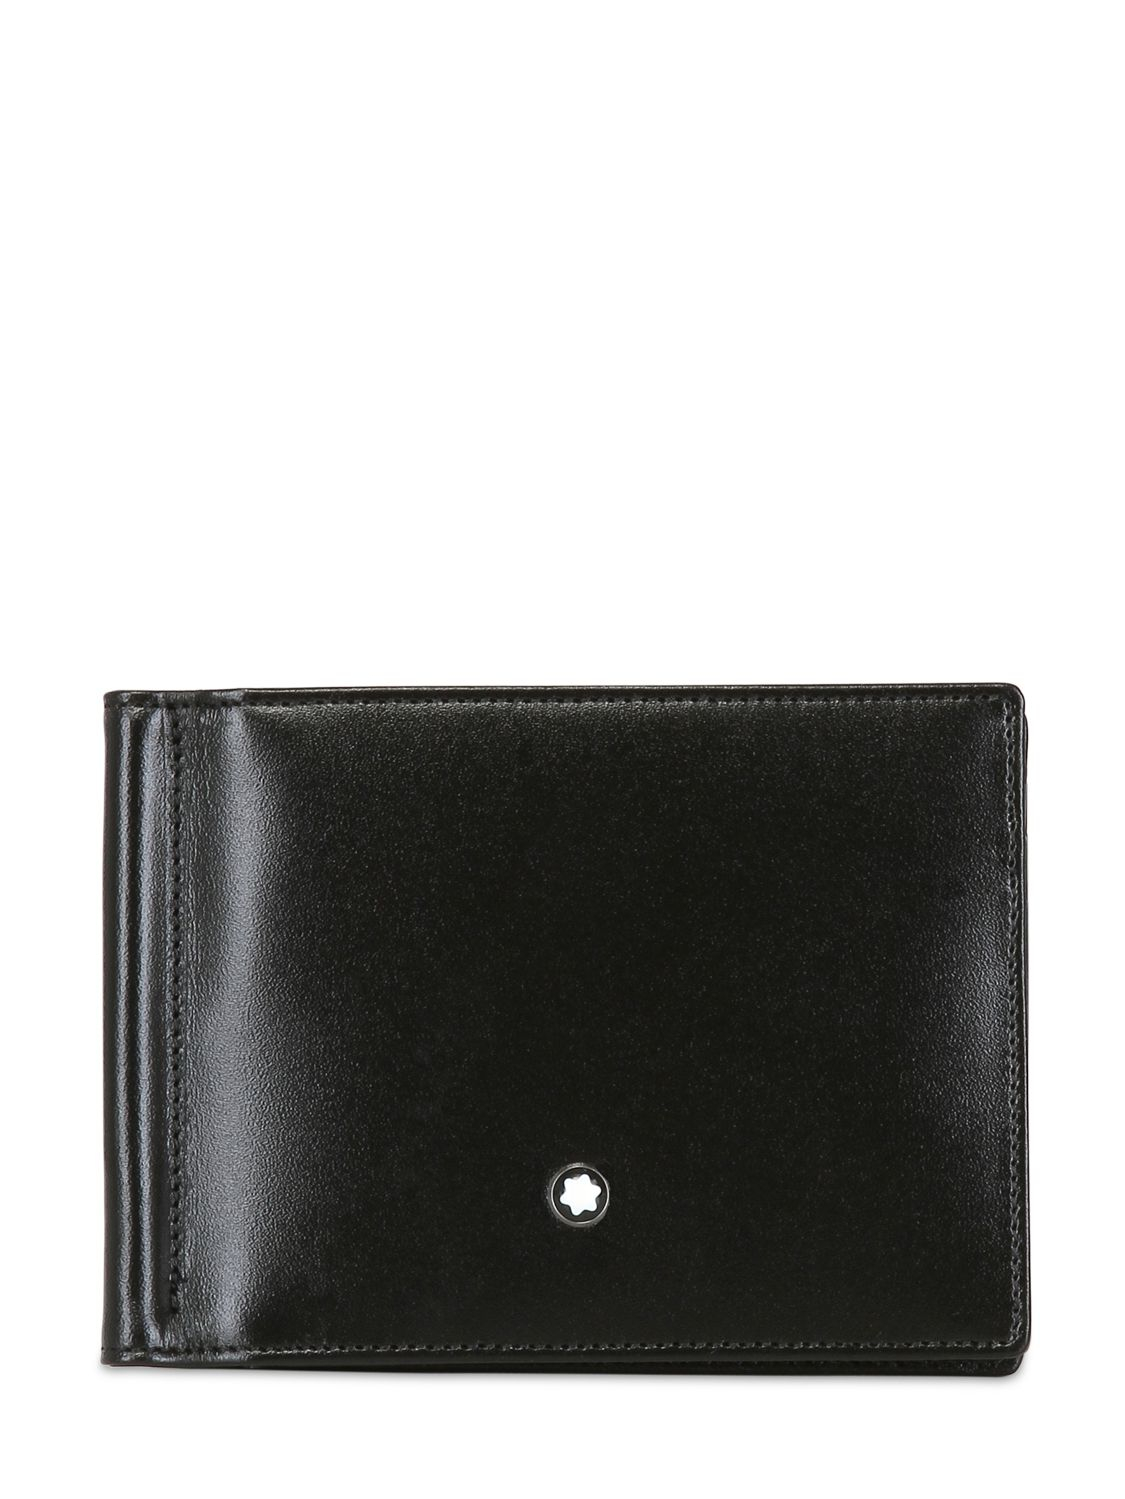 Montblanc Meisterstuck 6cc Wallet With Money Clip in Black for Men | Lyst